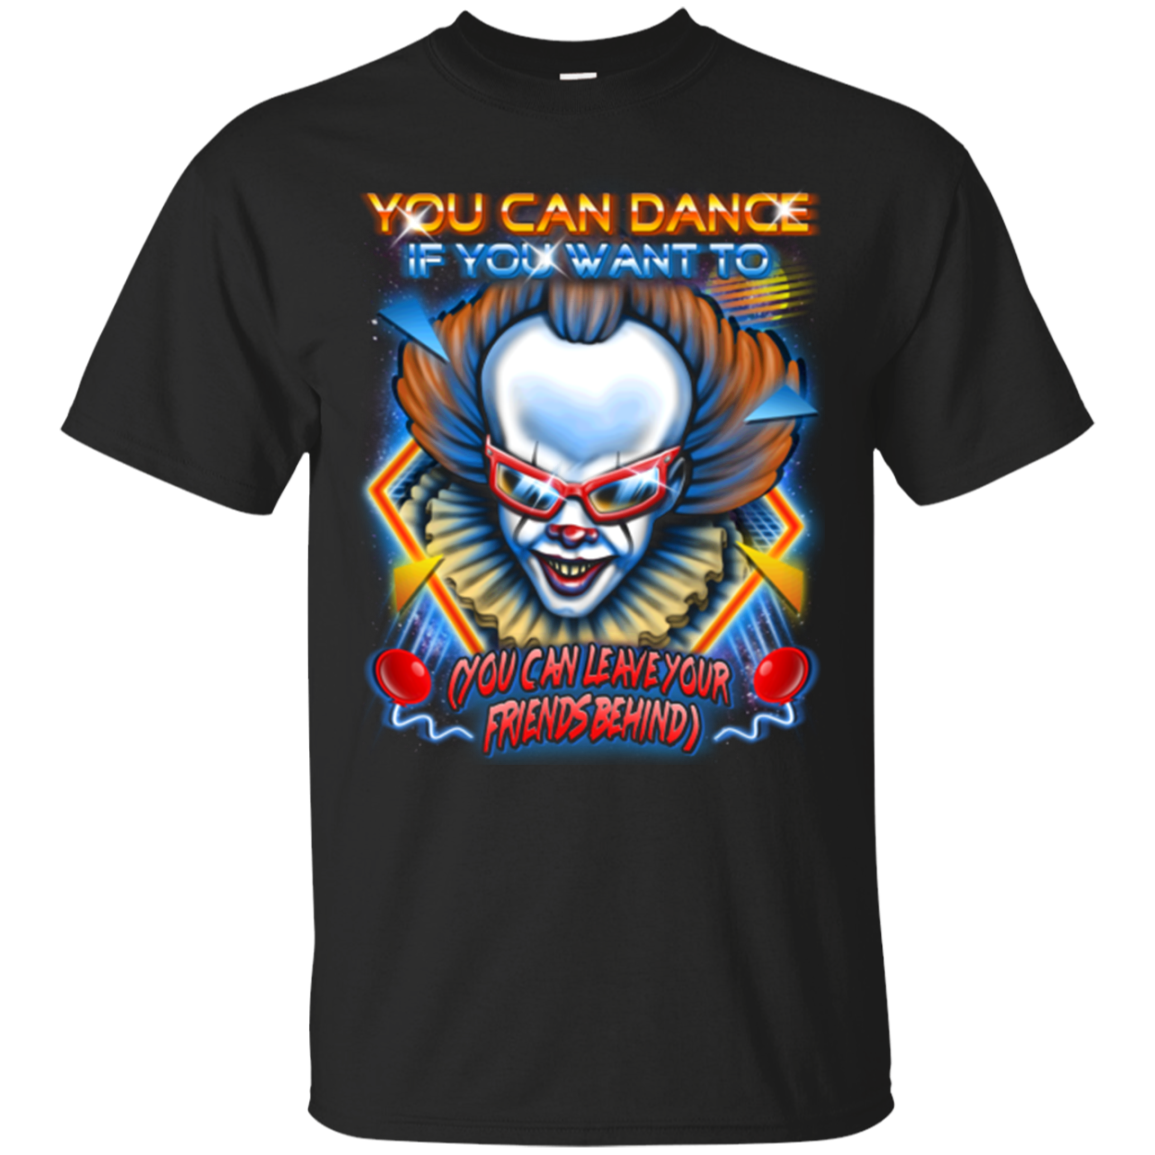 You can Dance T-Shirt